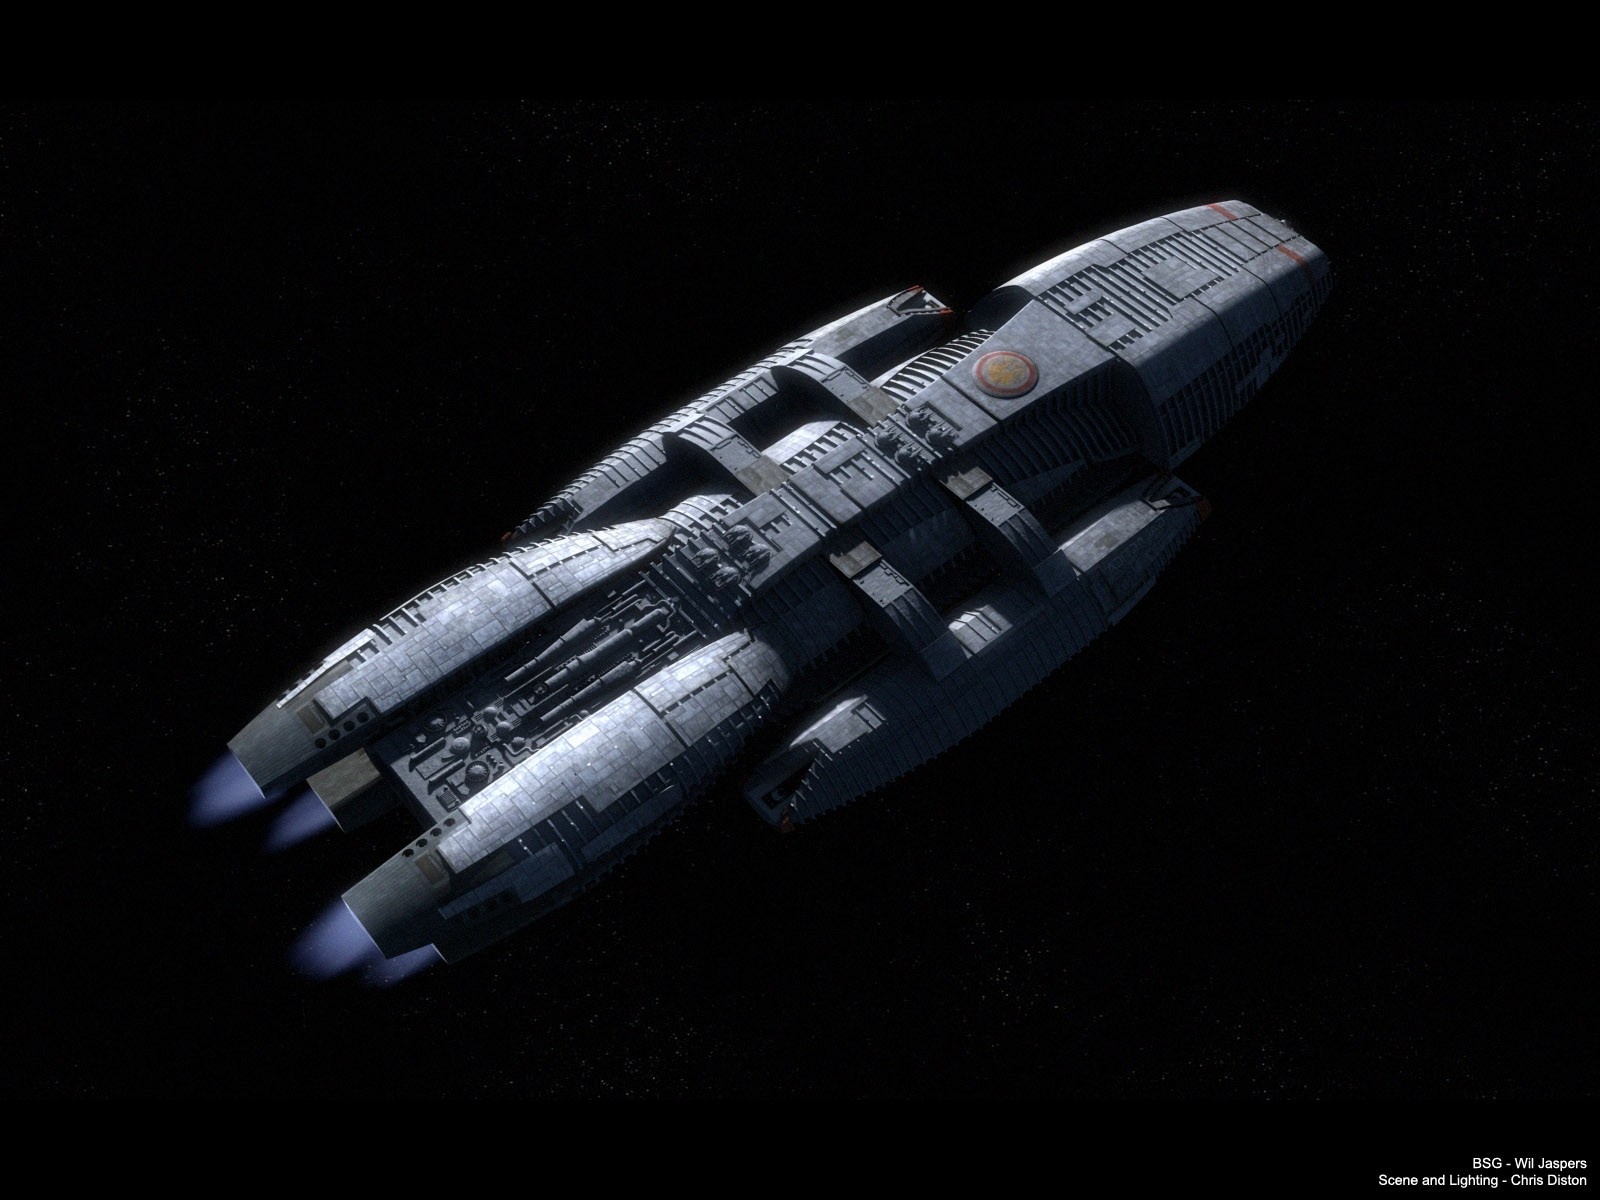 Spaceship battlestar galactica i